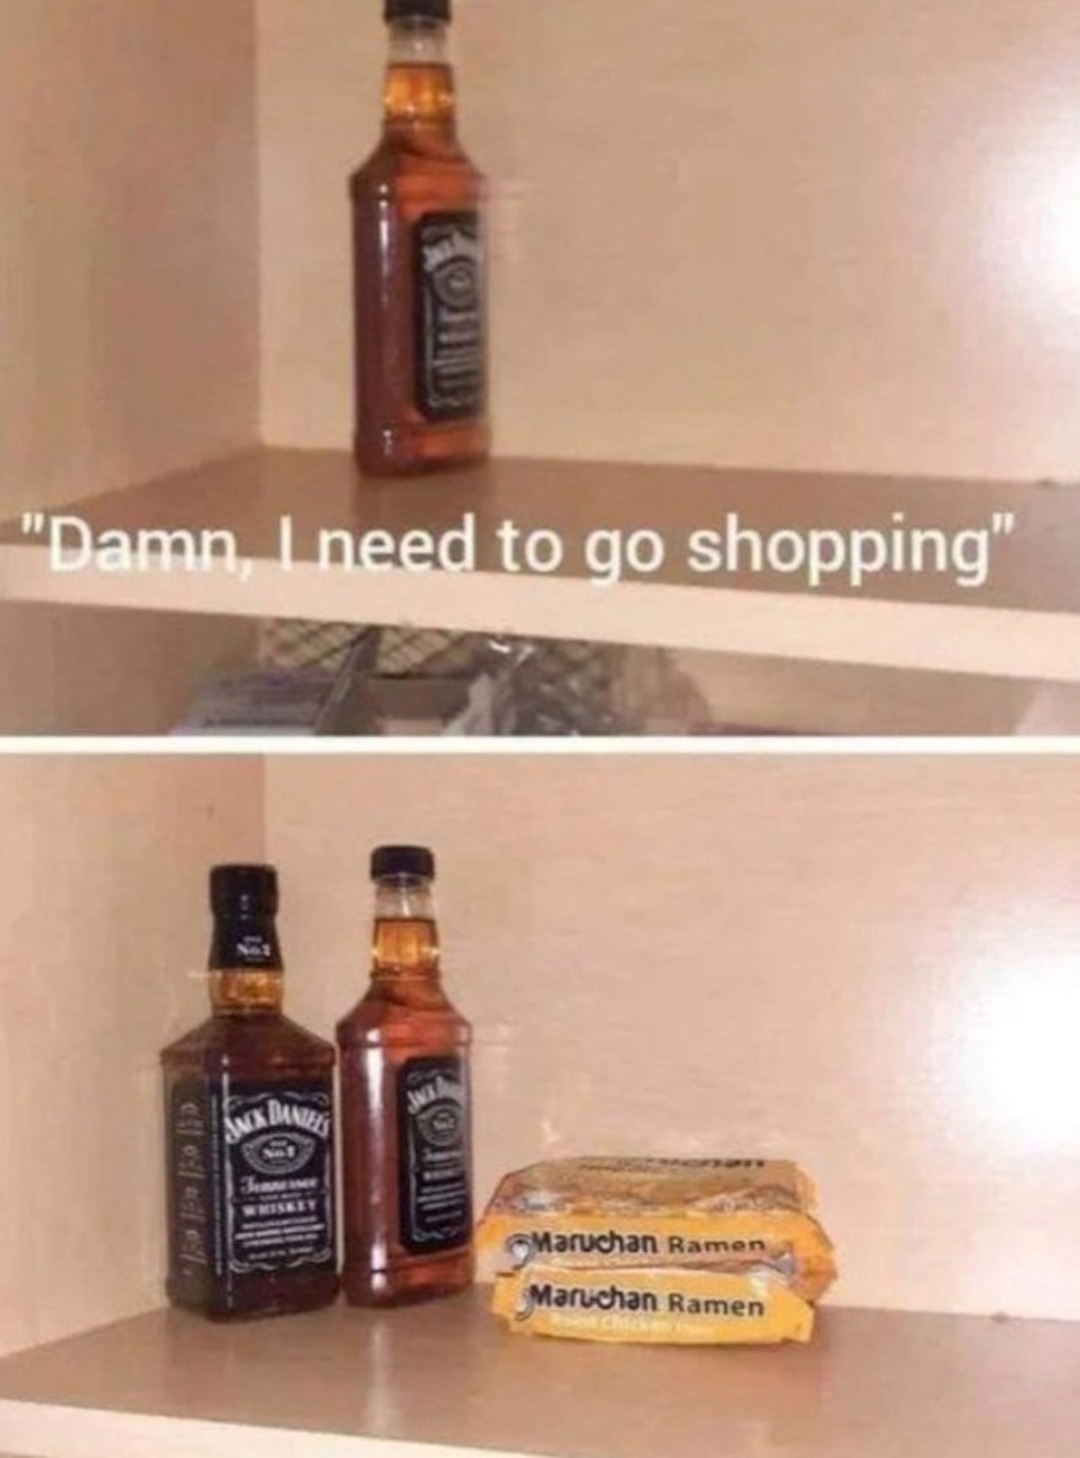 shopping - meme